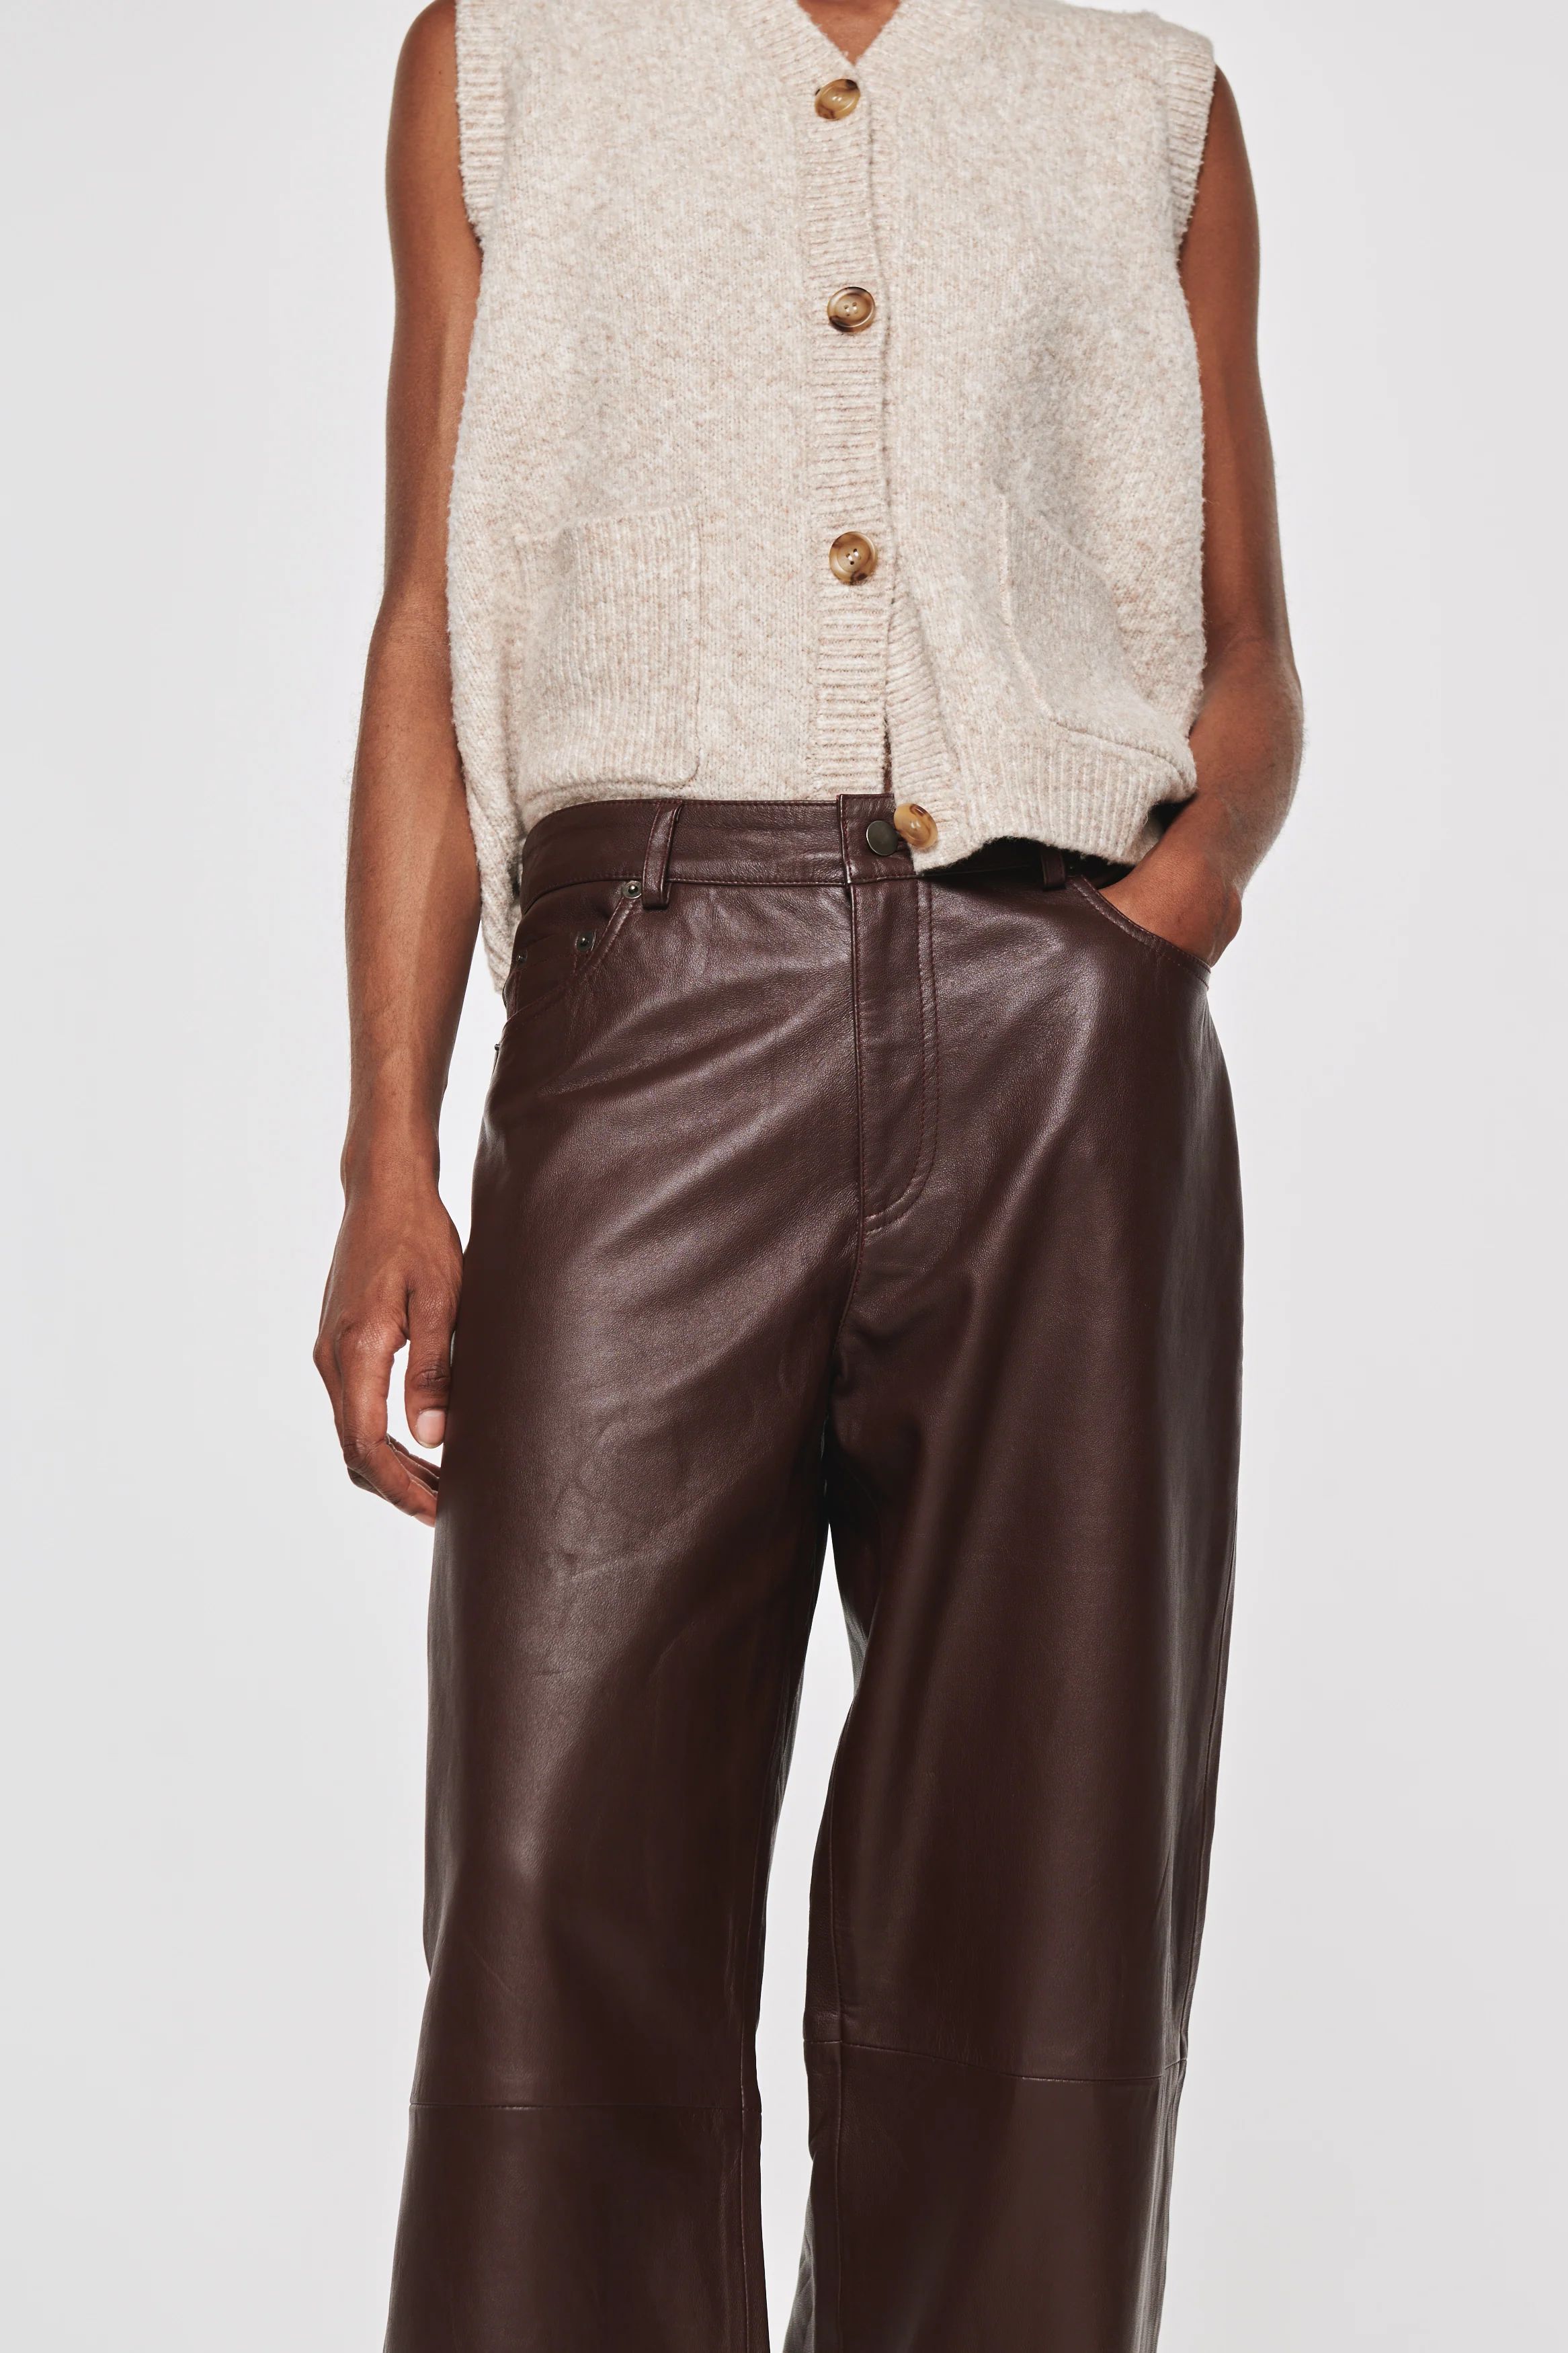 Kemi | Chrome-Free Leather Trousers in Chocolate | ALIGNE | Aligne UK